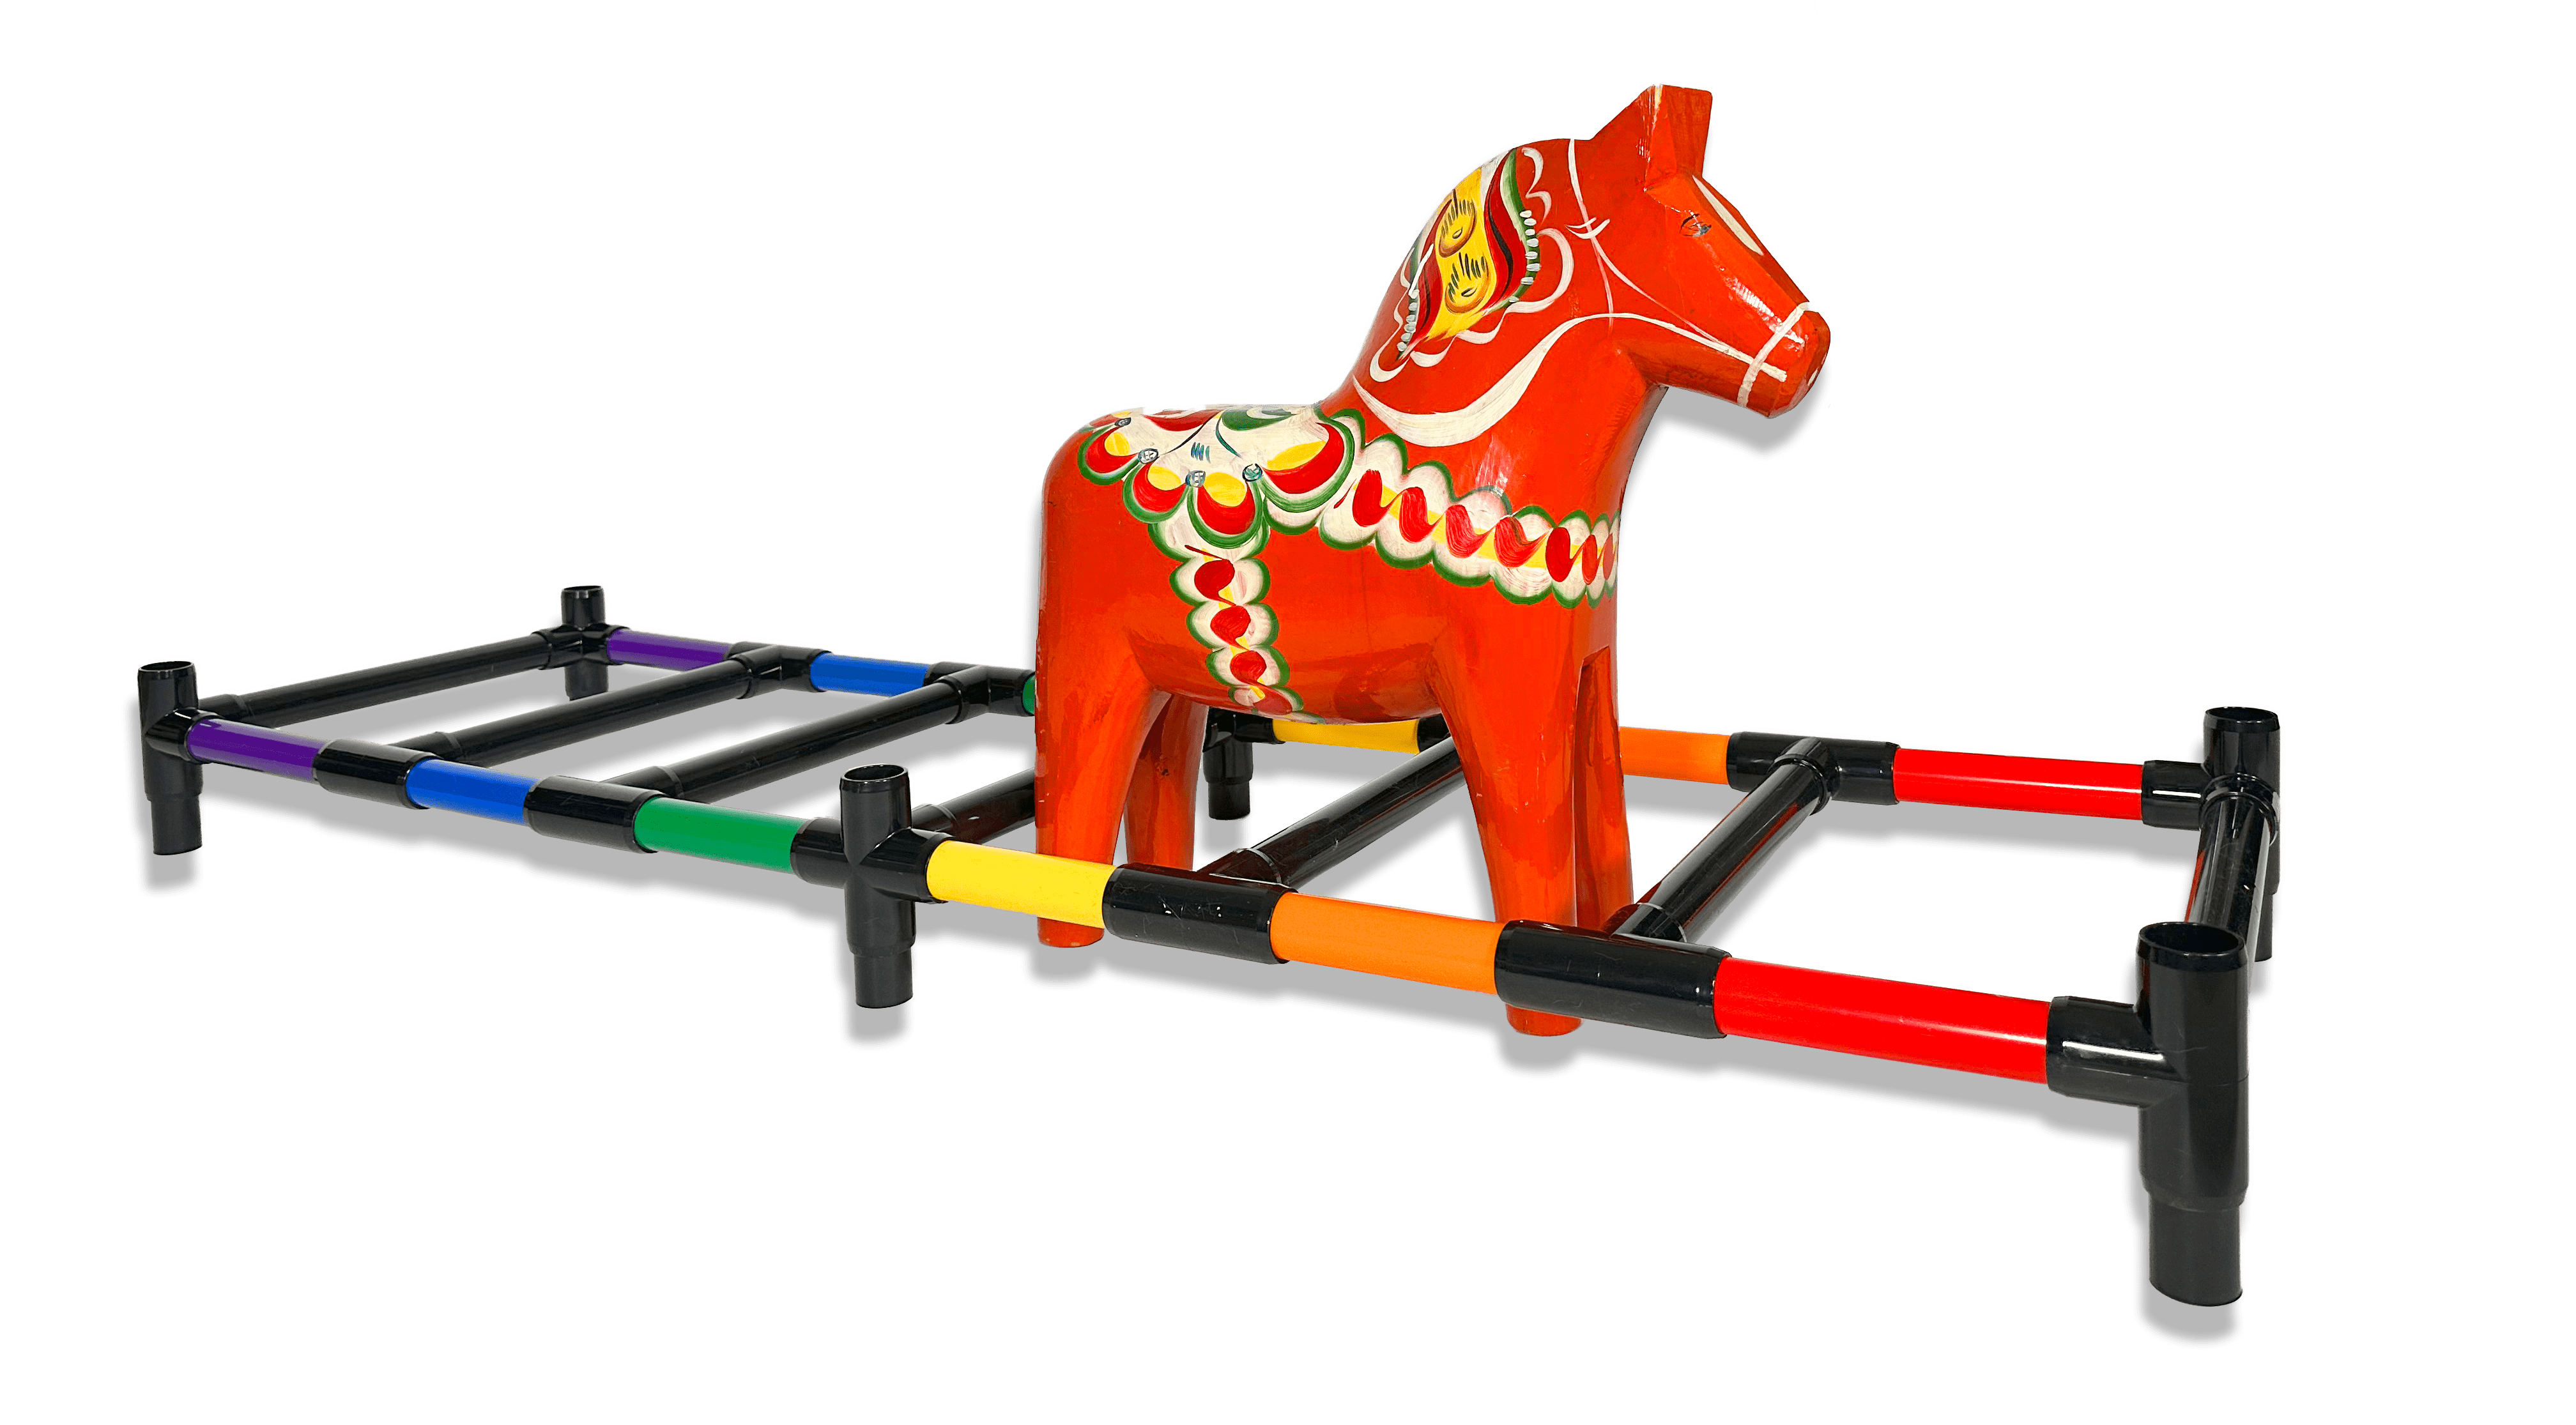 Rainbow Ladder (Small Dog) 🌈